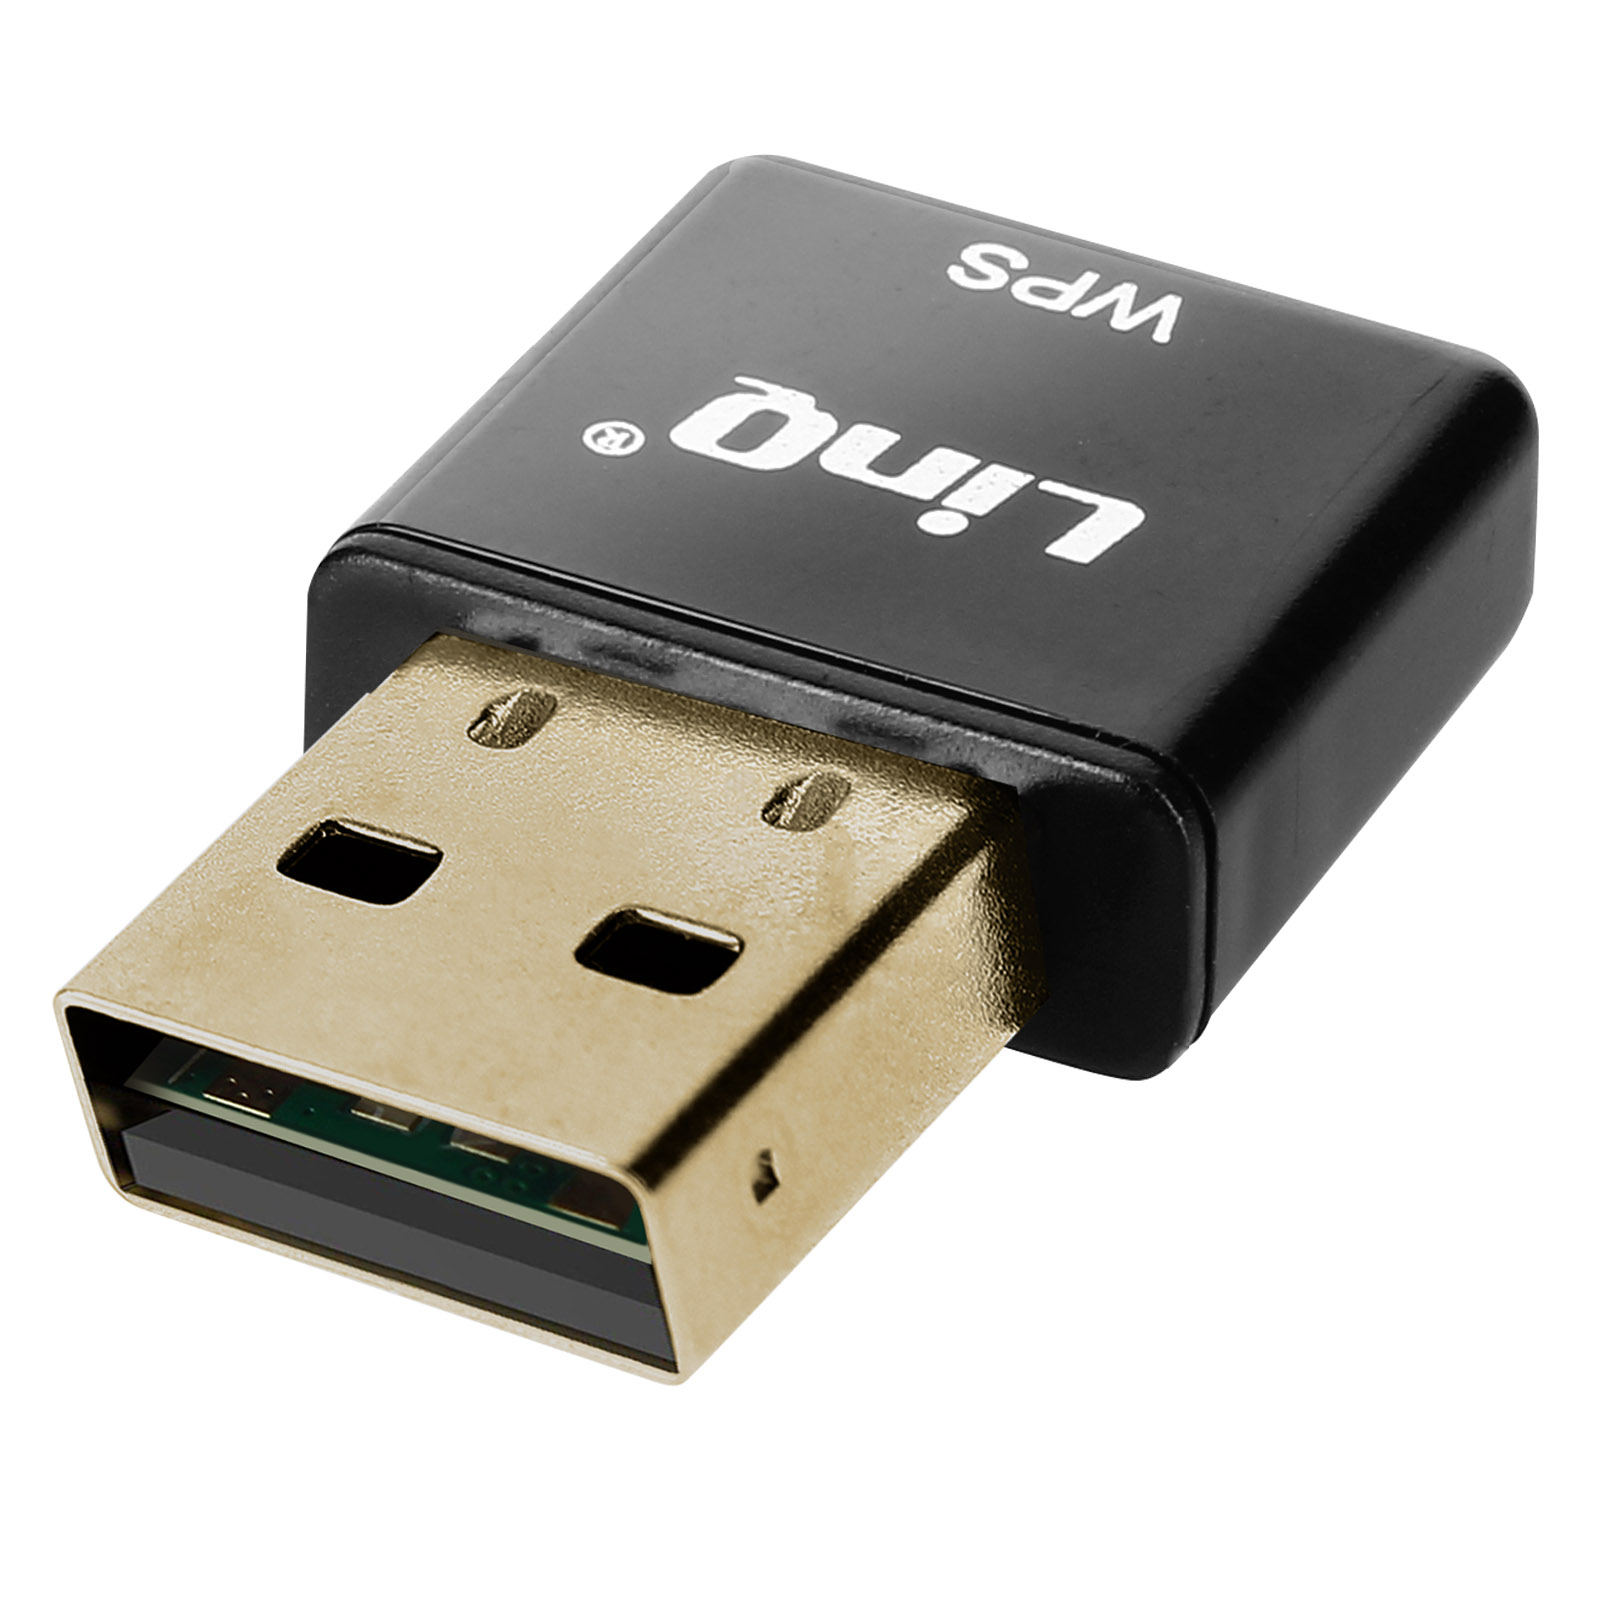 LINQ USB-Stick 300Mbps Adapter WiFi WiFi